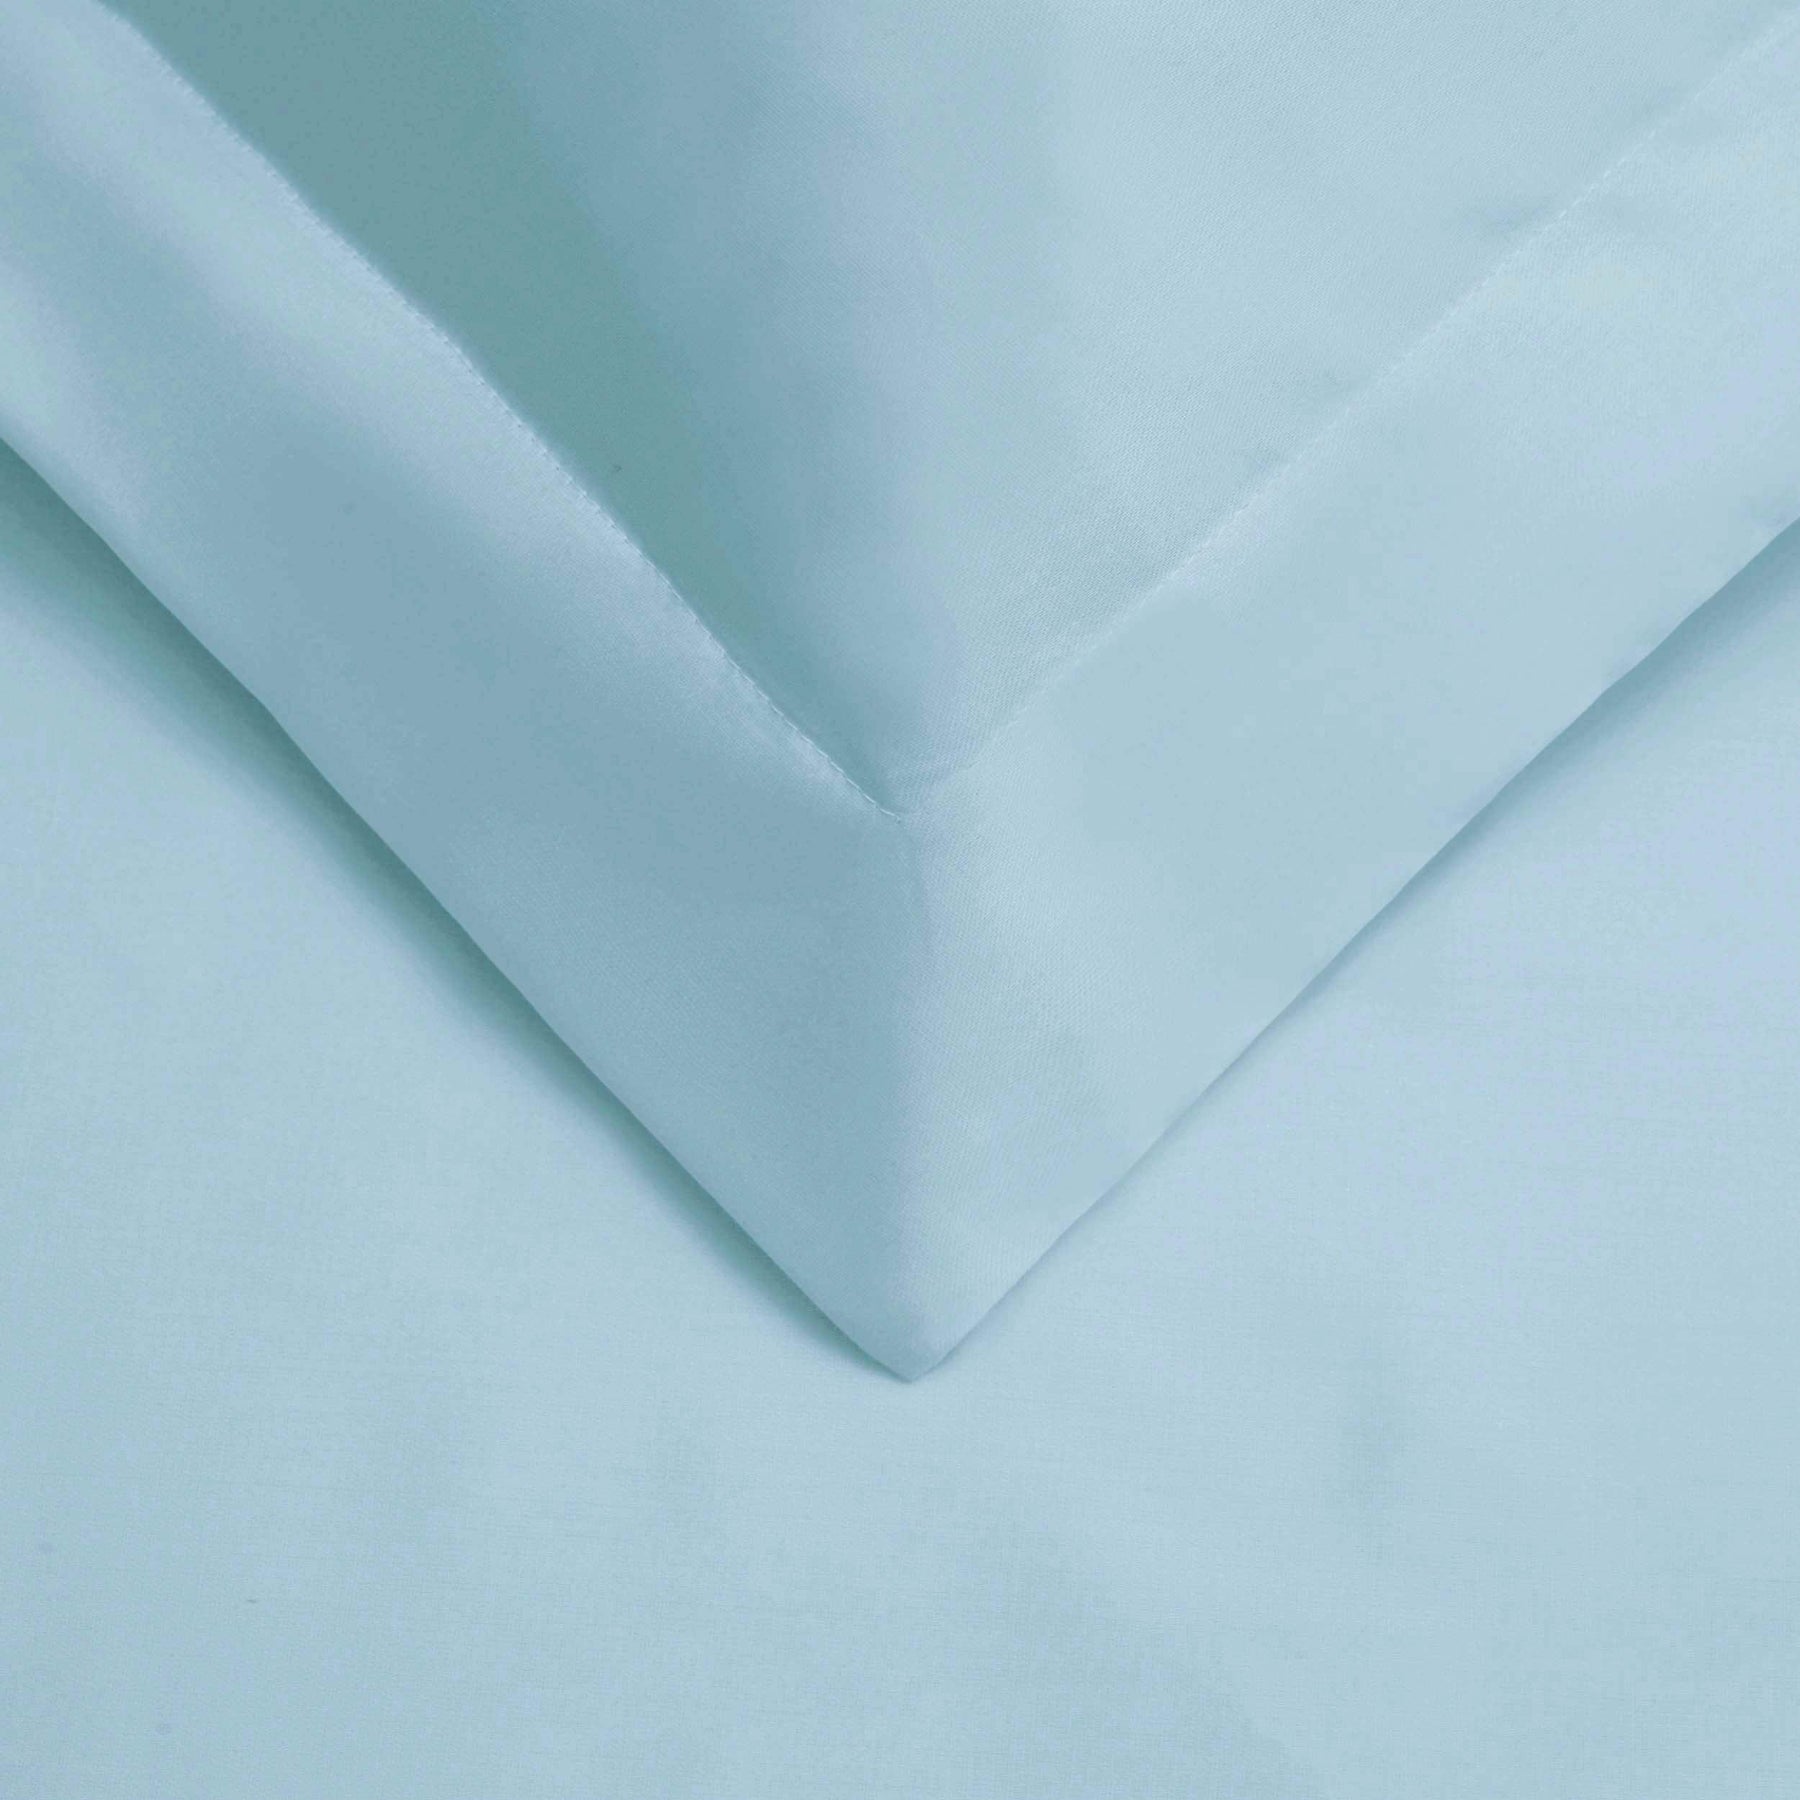  Superior Premium Egyptian Cotton 530 Thread Count Solid Duvet Cover Set -  Light Blue